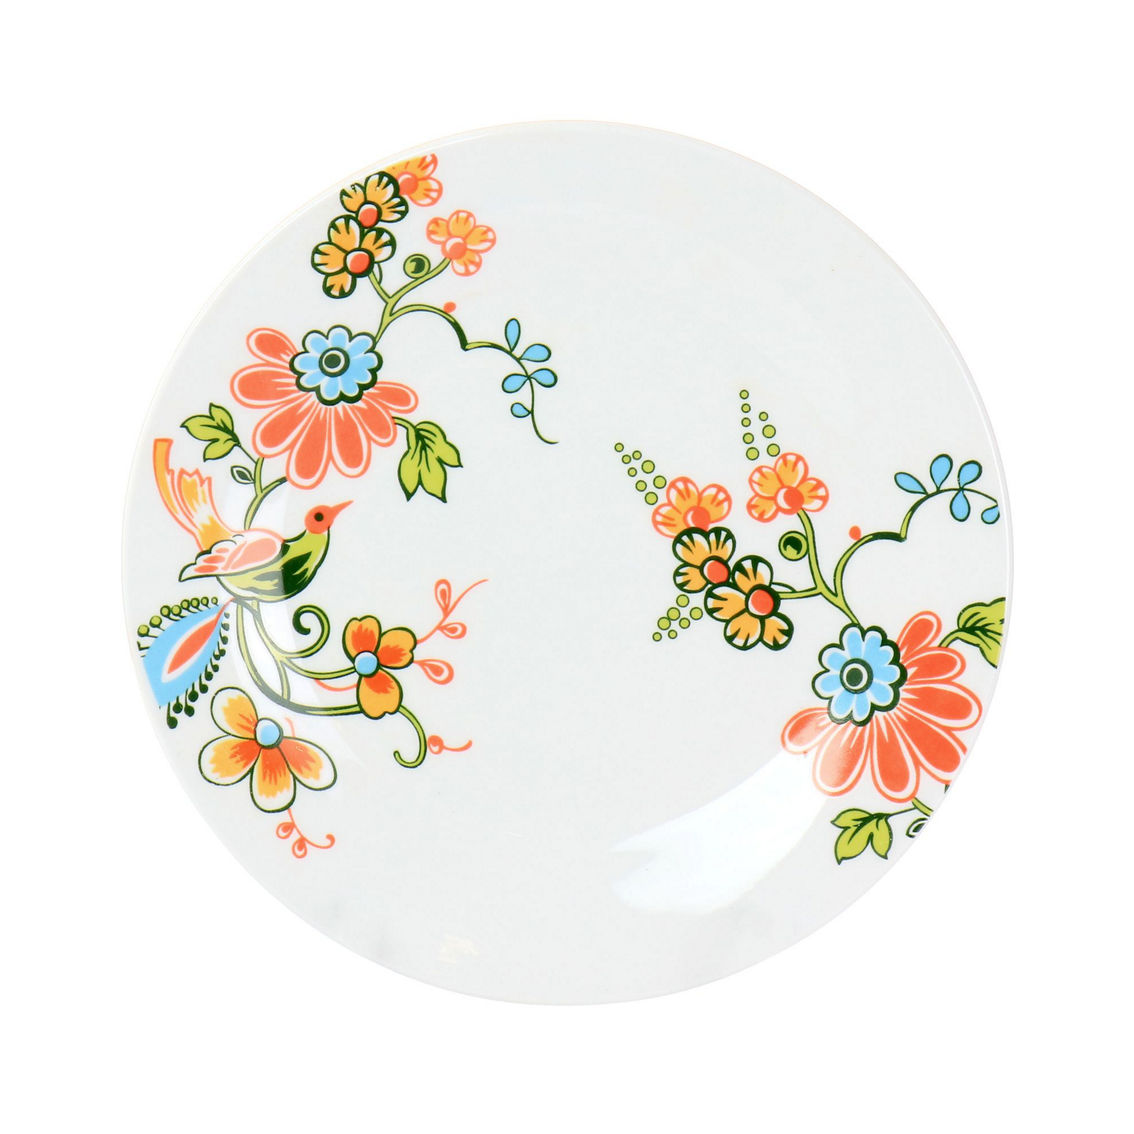 Elama Spring Bloom 16 Piece Round Porcelain Dinnerware Set - Image 4 of 5